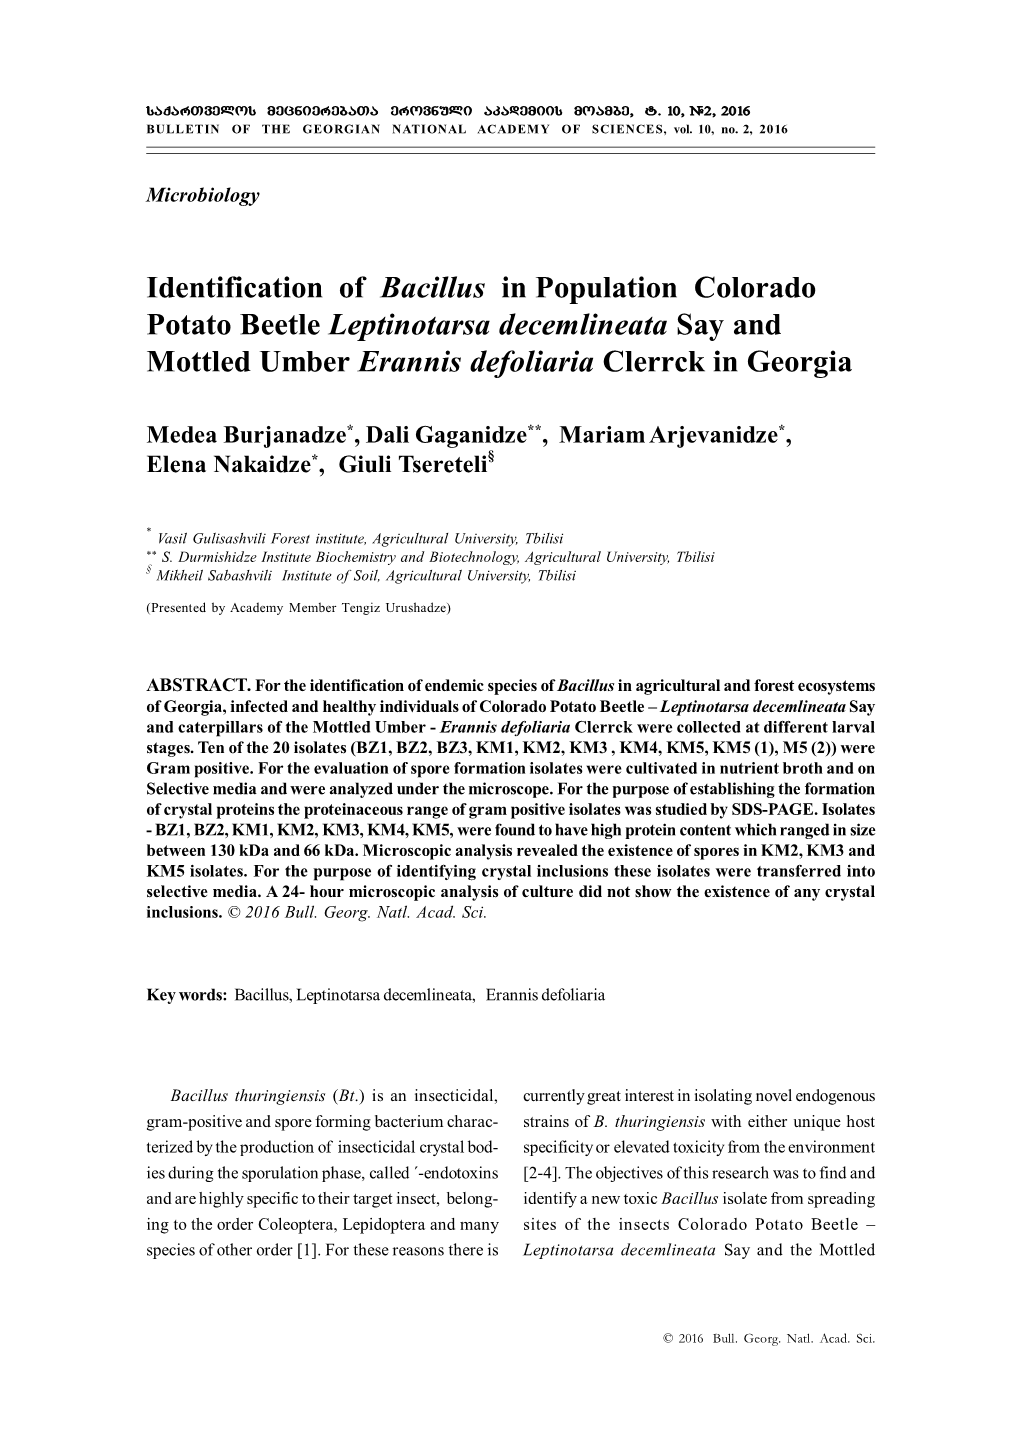 Identification of Bacillus in Population Colorado Potato Beetle Leptinotarsa Decemlineata Say and Mottled Umber Erannis Defoliaria Clerrck in Georgia